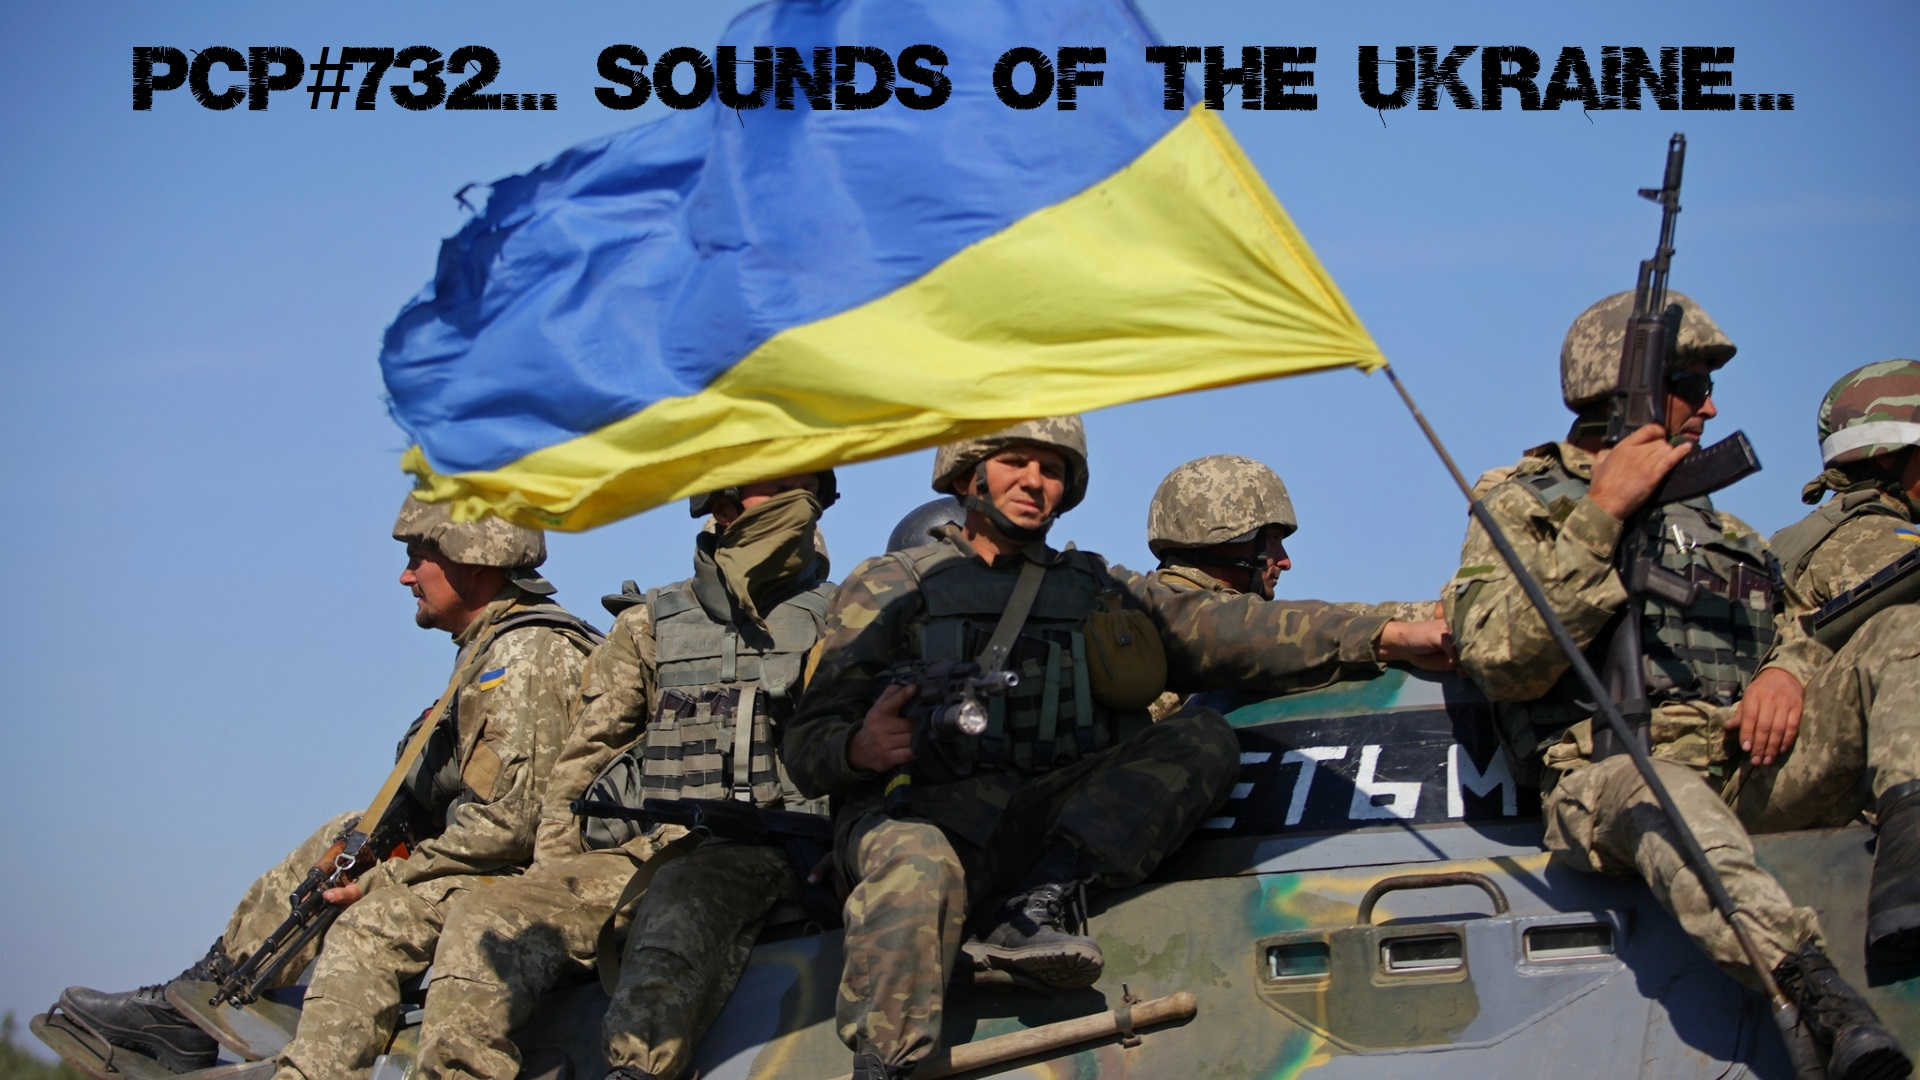 PCP#732... Sounds of The Ukraine!....